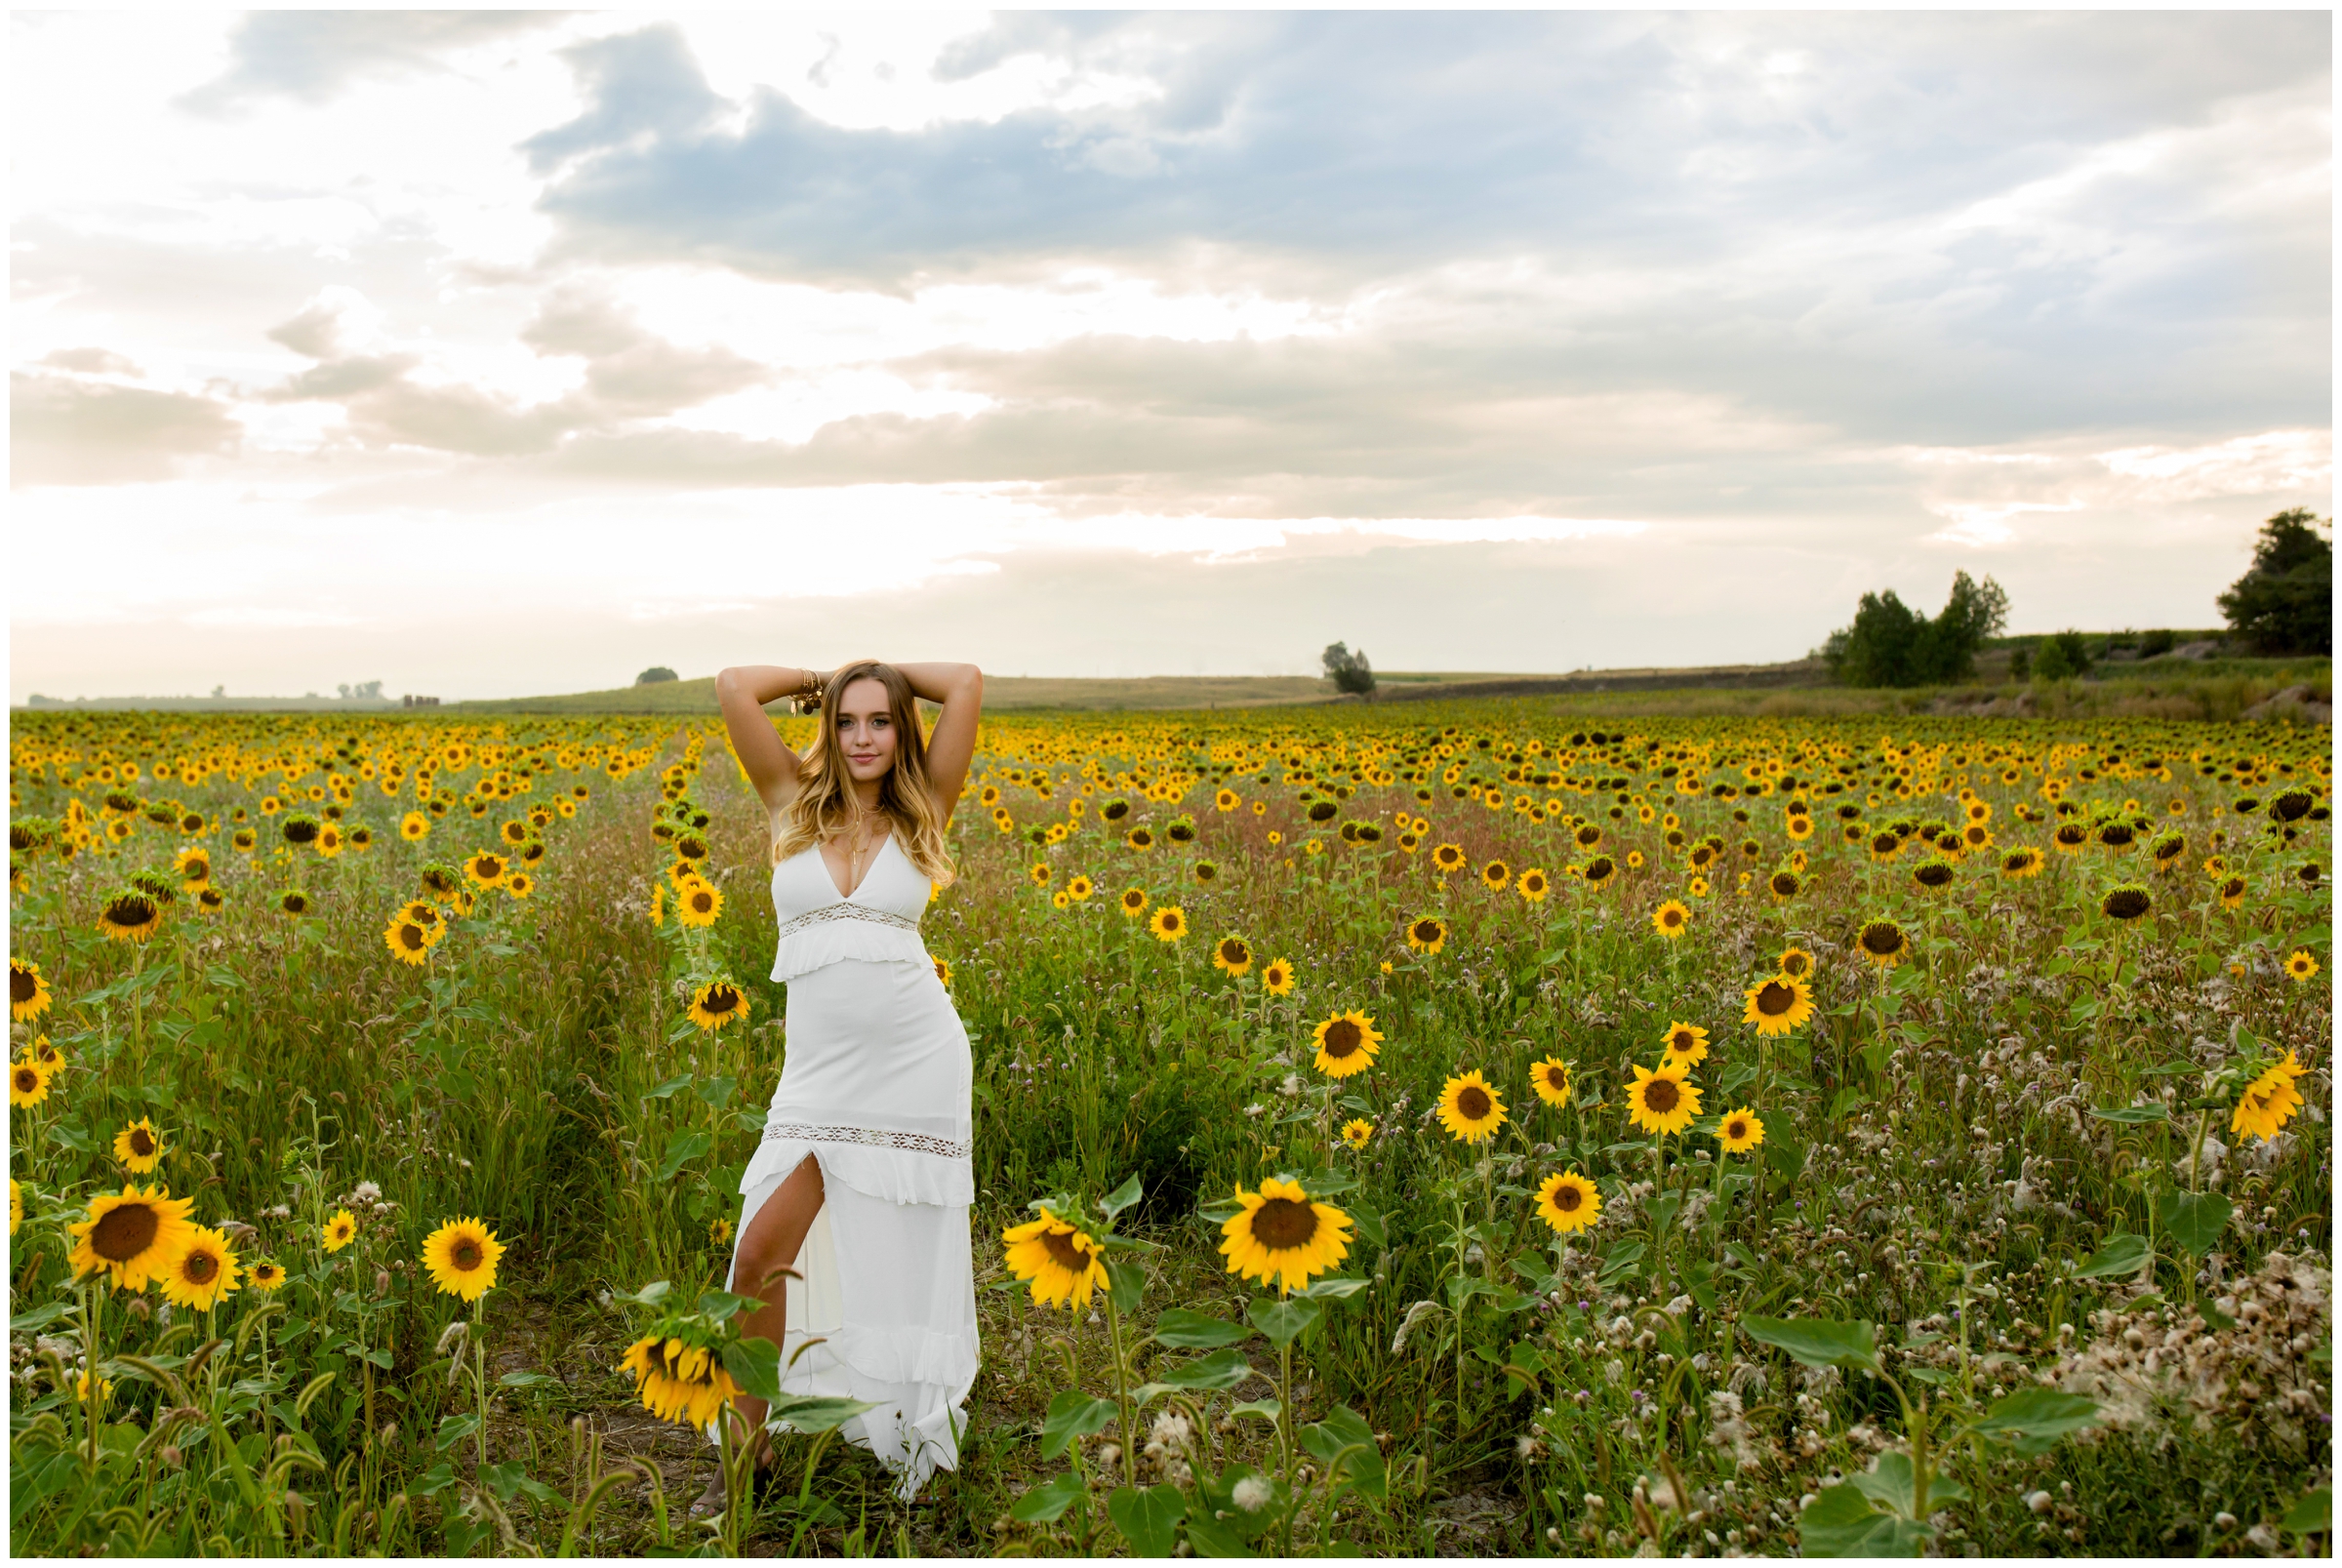 Berthoud senior photos in sunflower field by Colorado portrait photographer Plum Pretty Photography